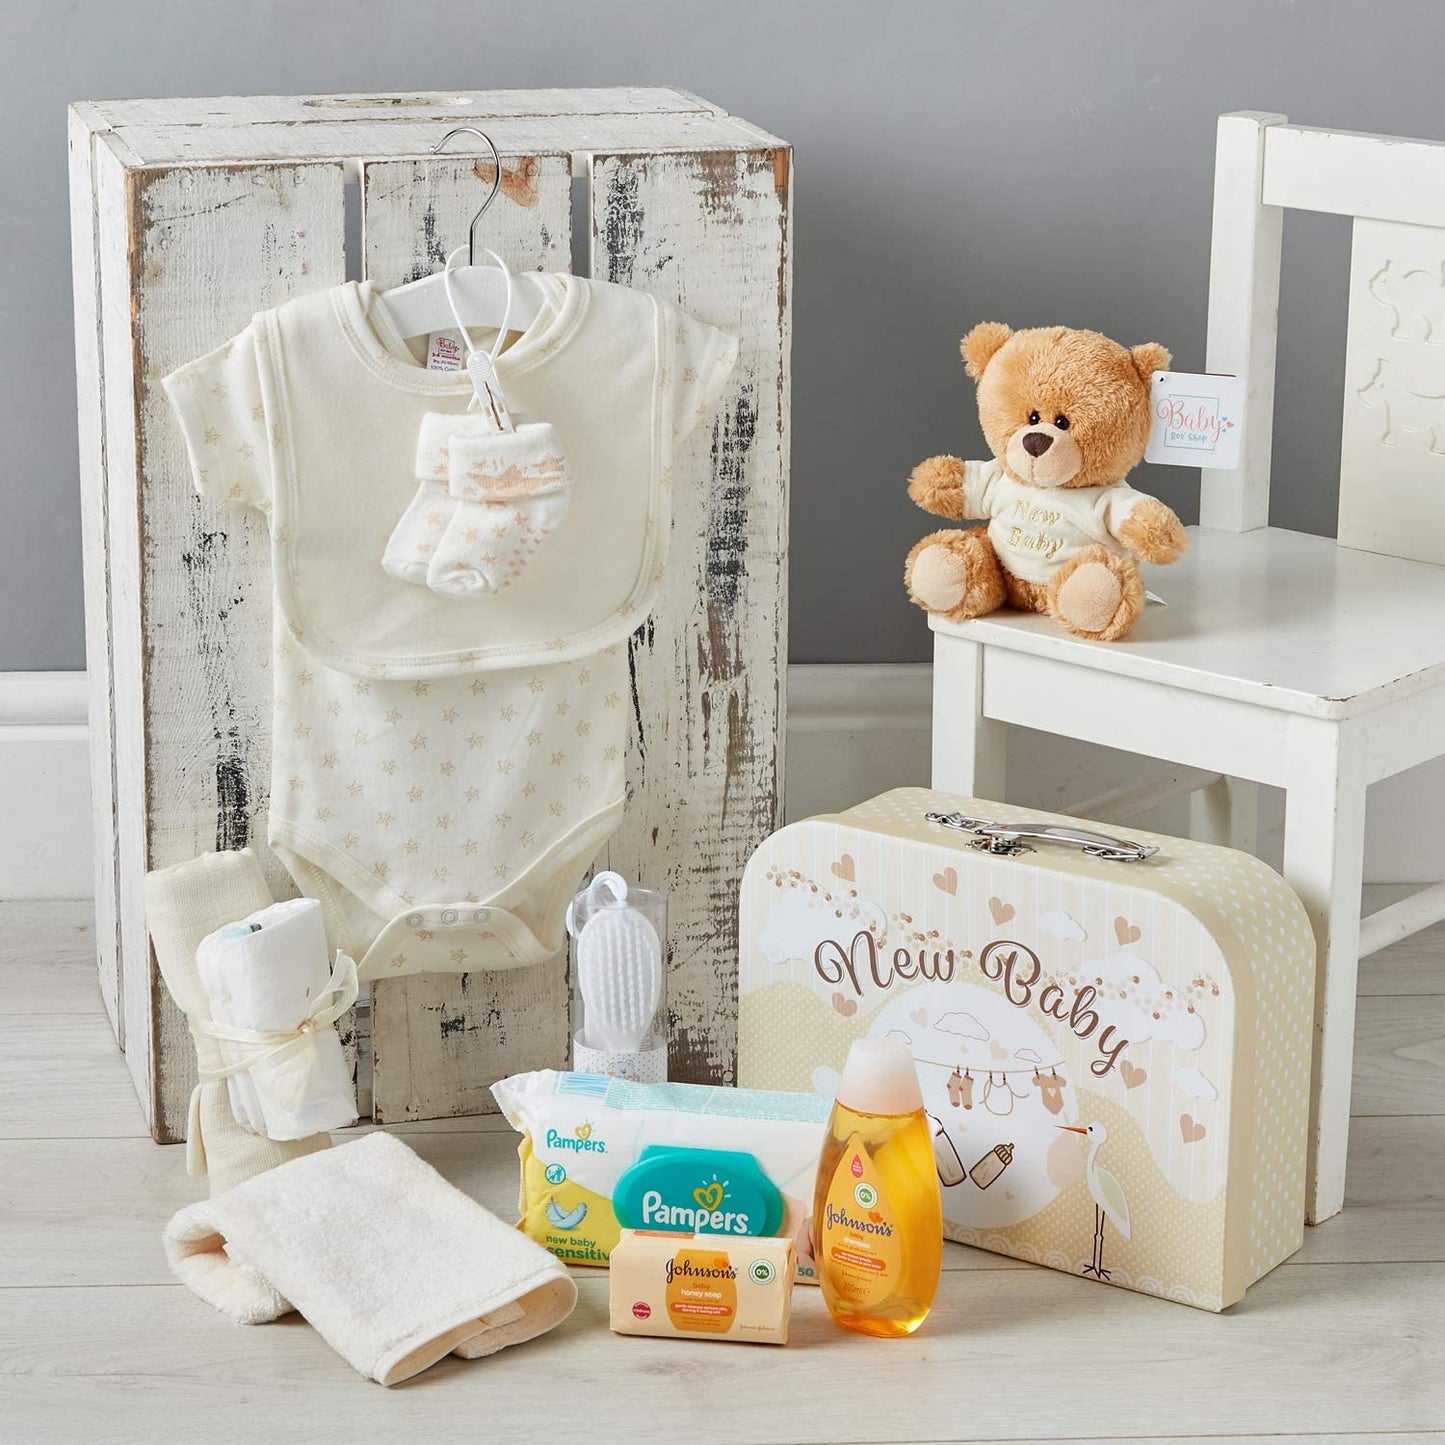 Baby Newborn Baby Gifts - Baby Hamper Cream Includes Baby Essentials for Newborn, Teddy Bear, New Born Baby Essentials, New Baby Gifts